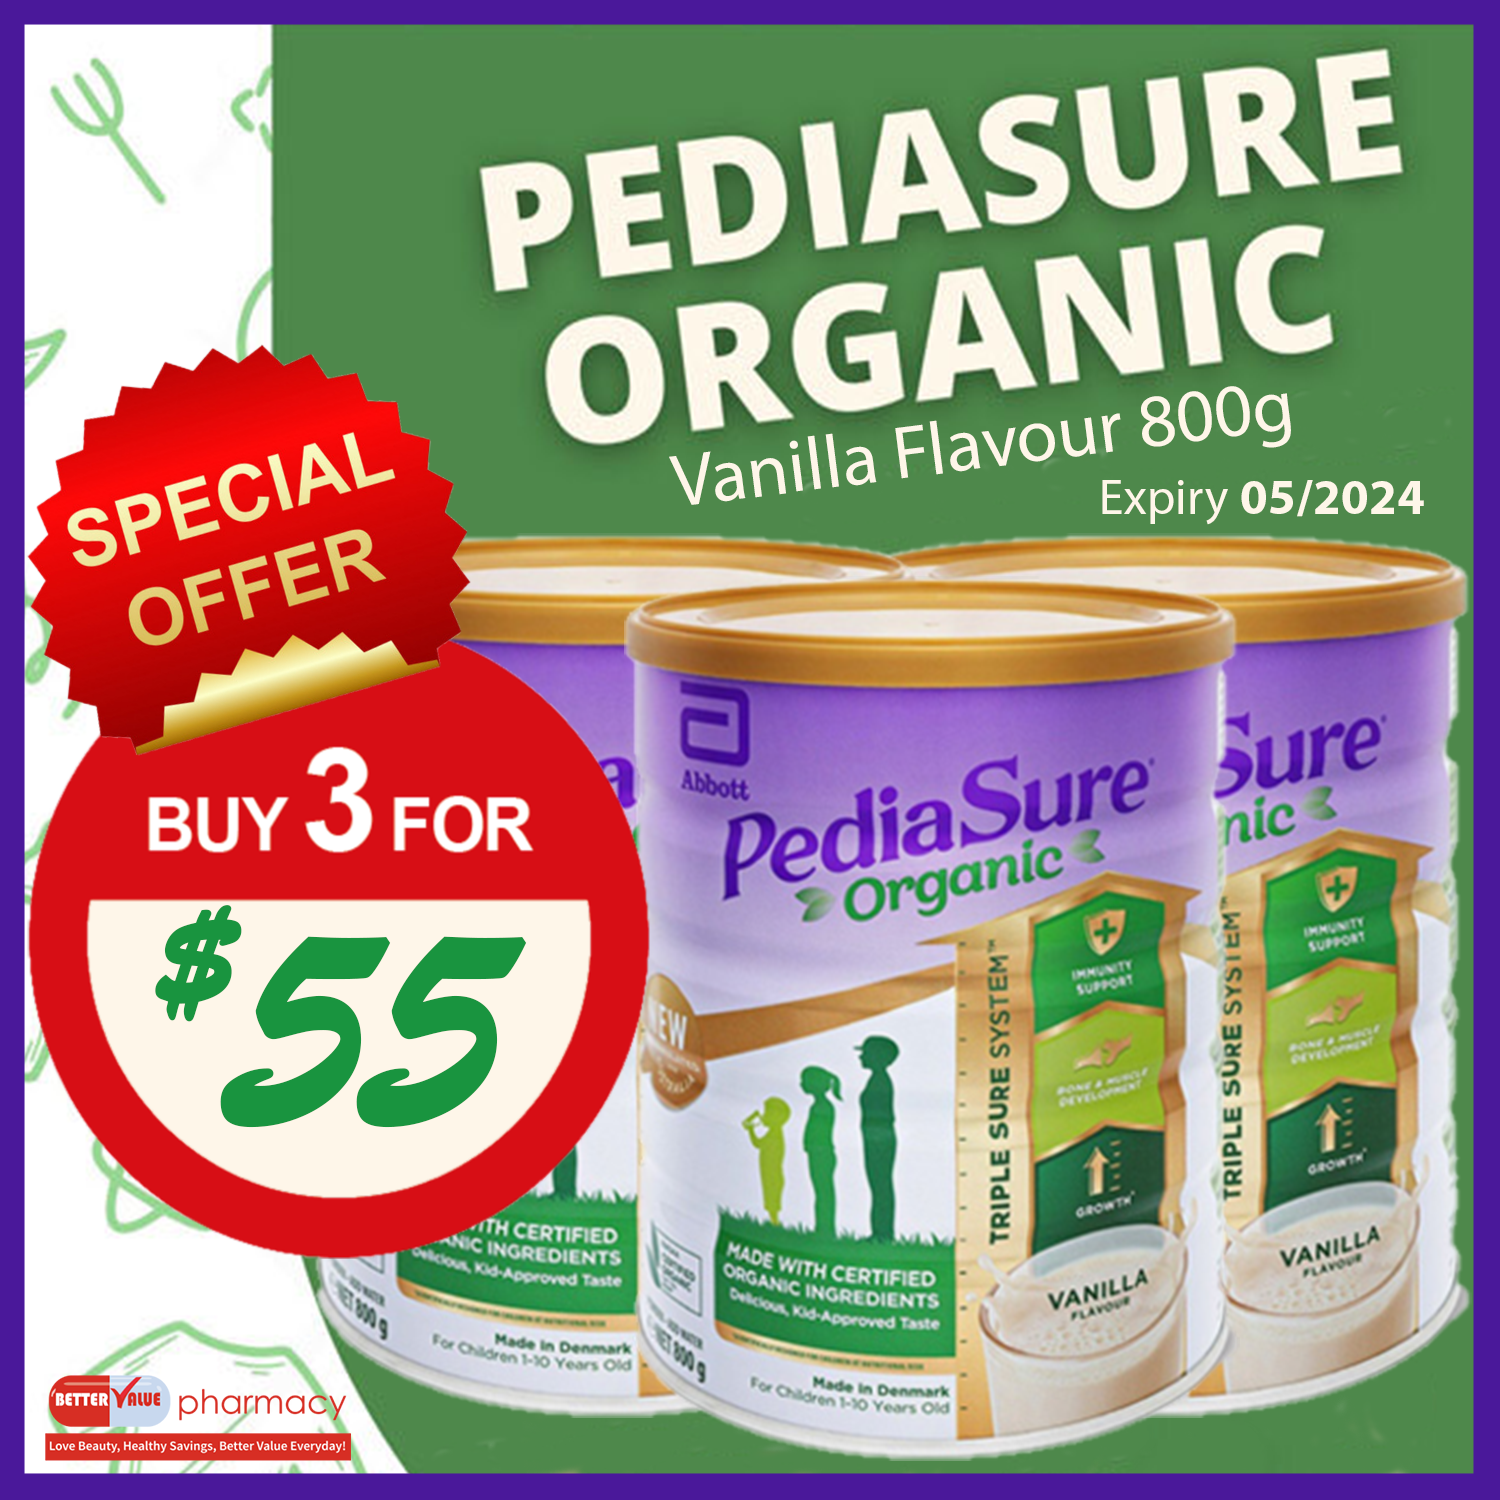 Pediasure Organic Vanilla Flavour 3 x 800g (Expiry 05/2024) - Special Bundles